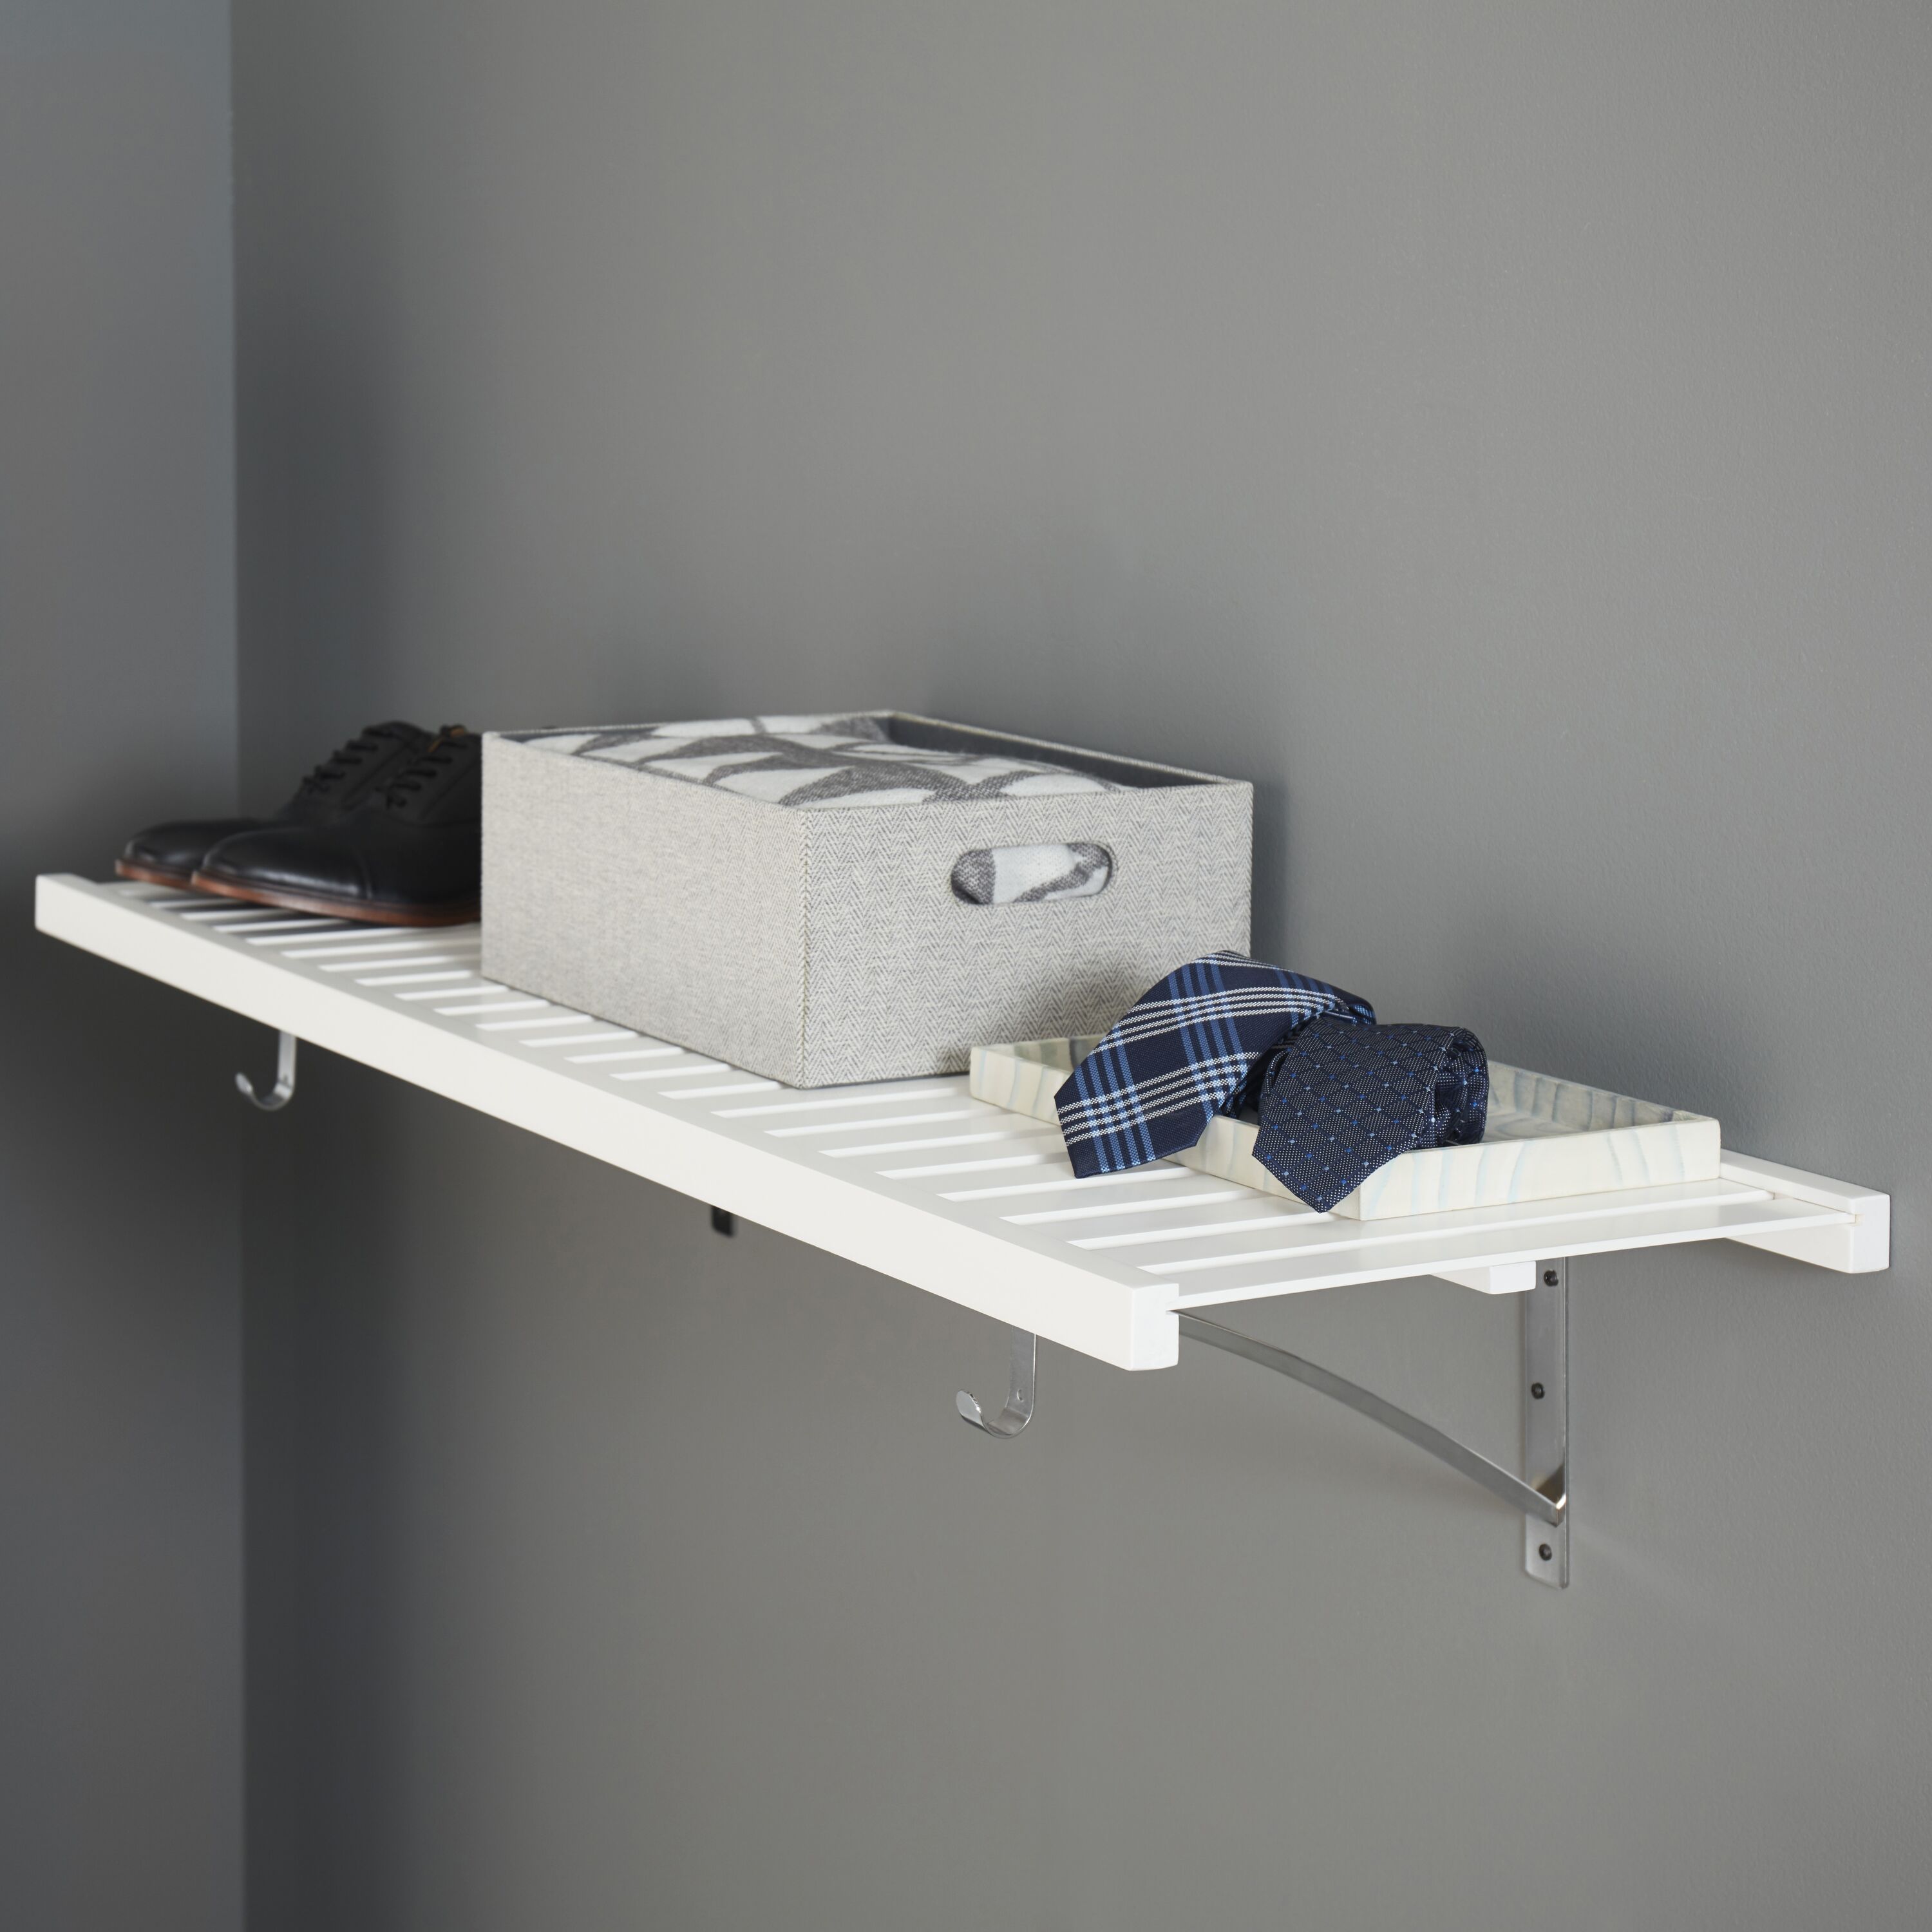 Yoga Mat Rack 2 Shelves with 2 Mat Racks – Wood River Iron Works